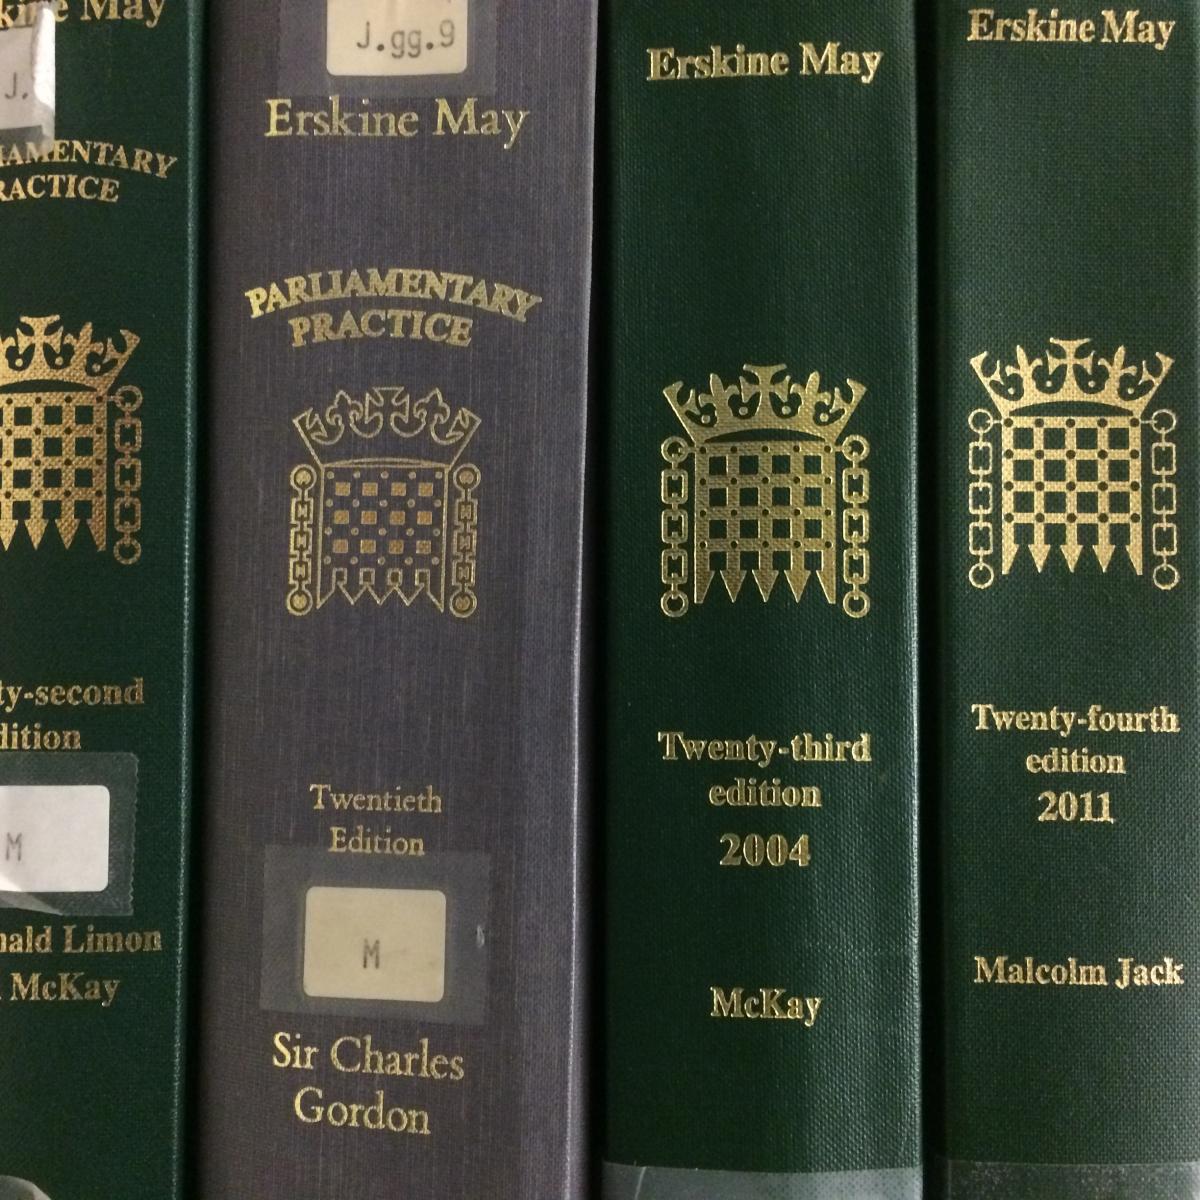 Erskine May volumes on shelf